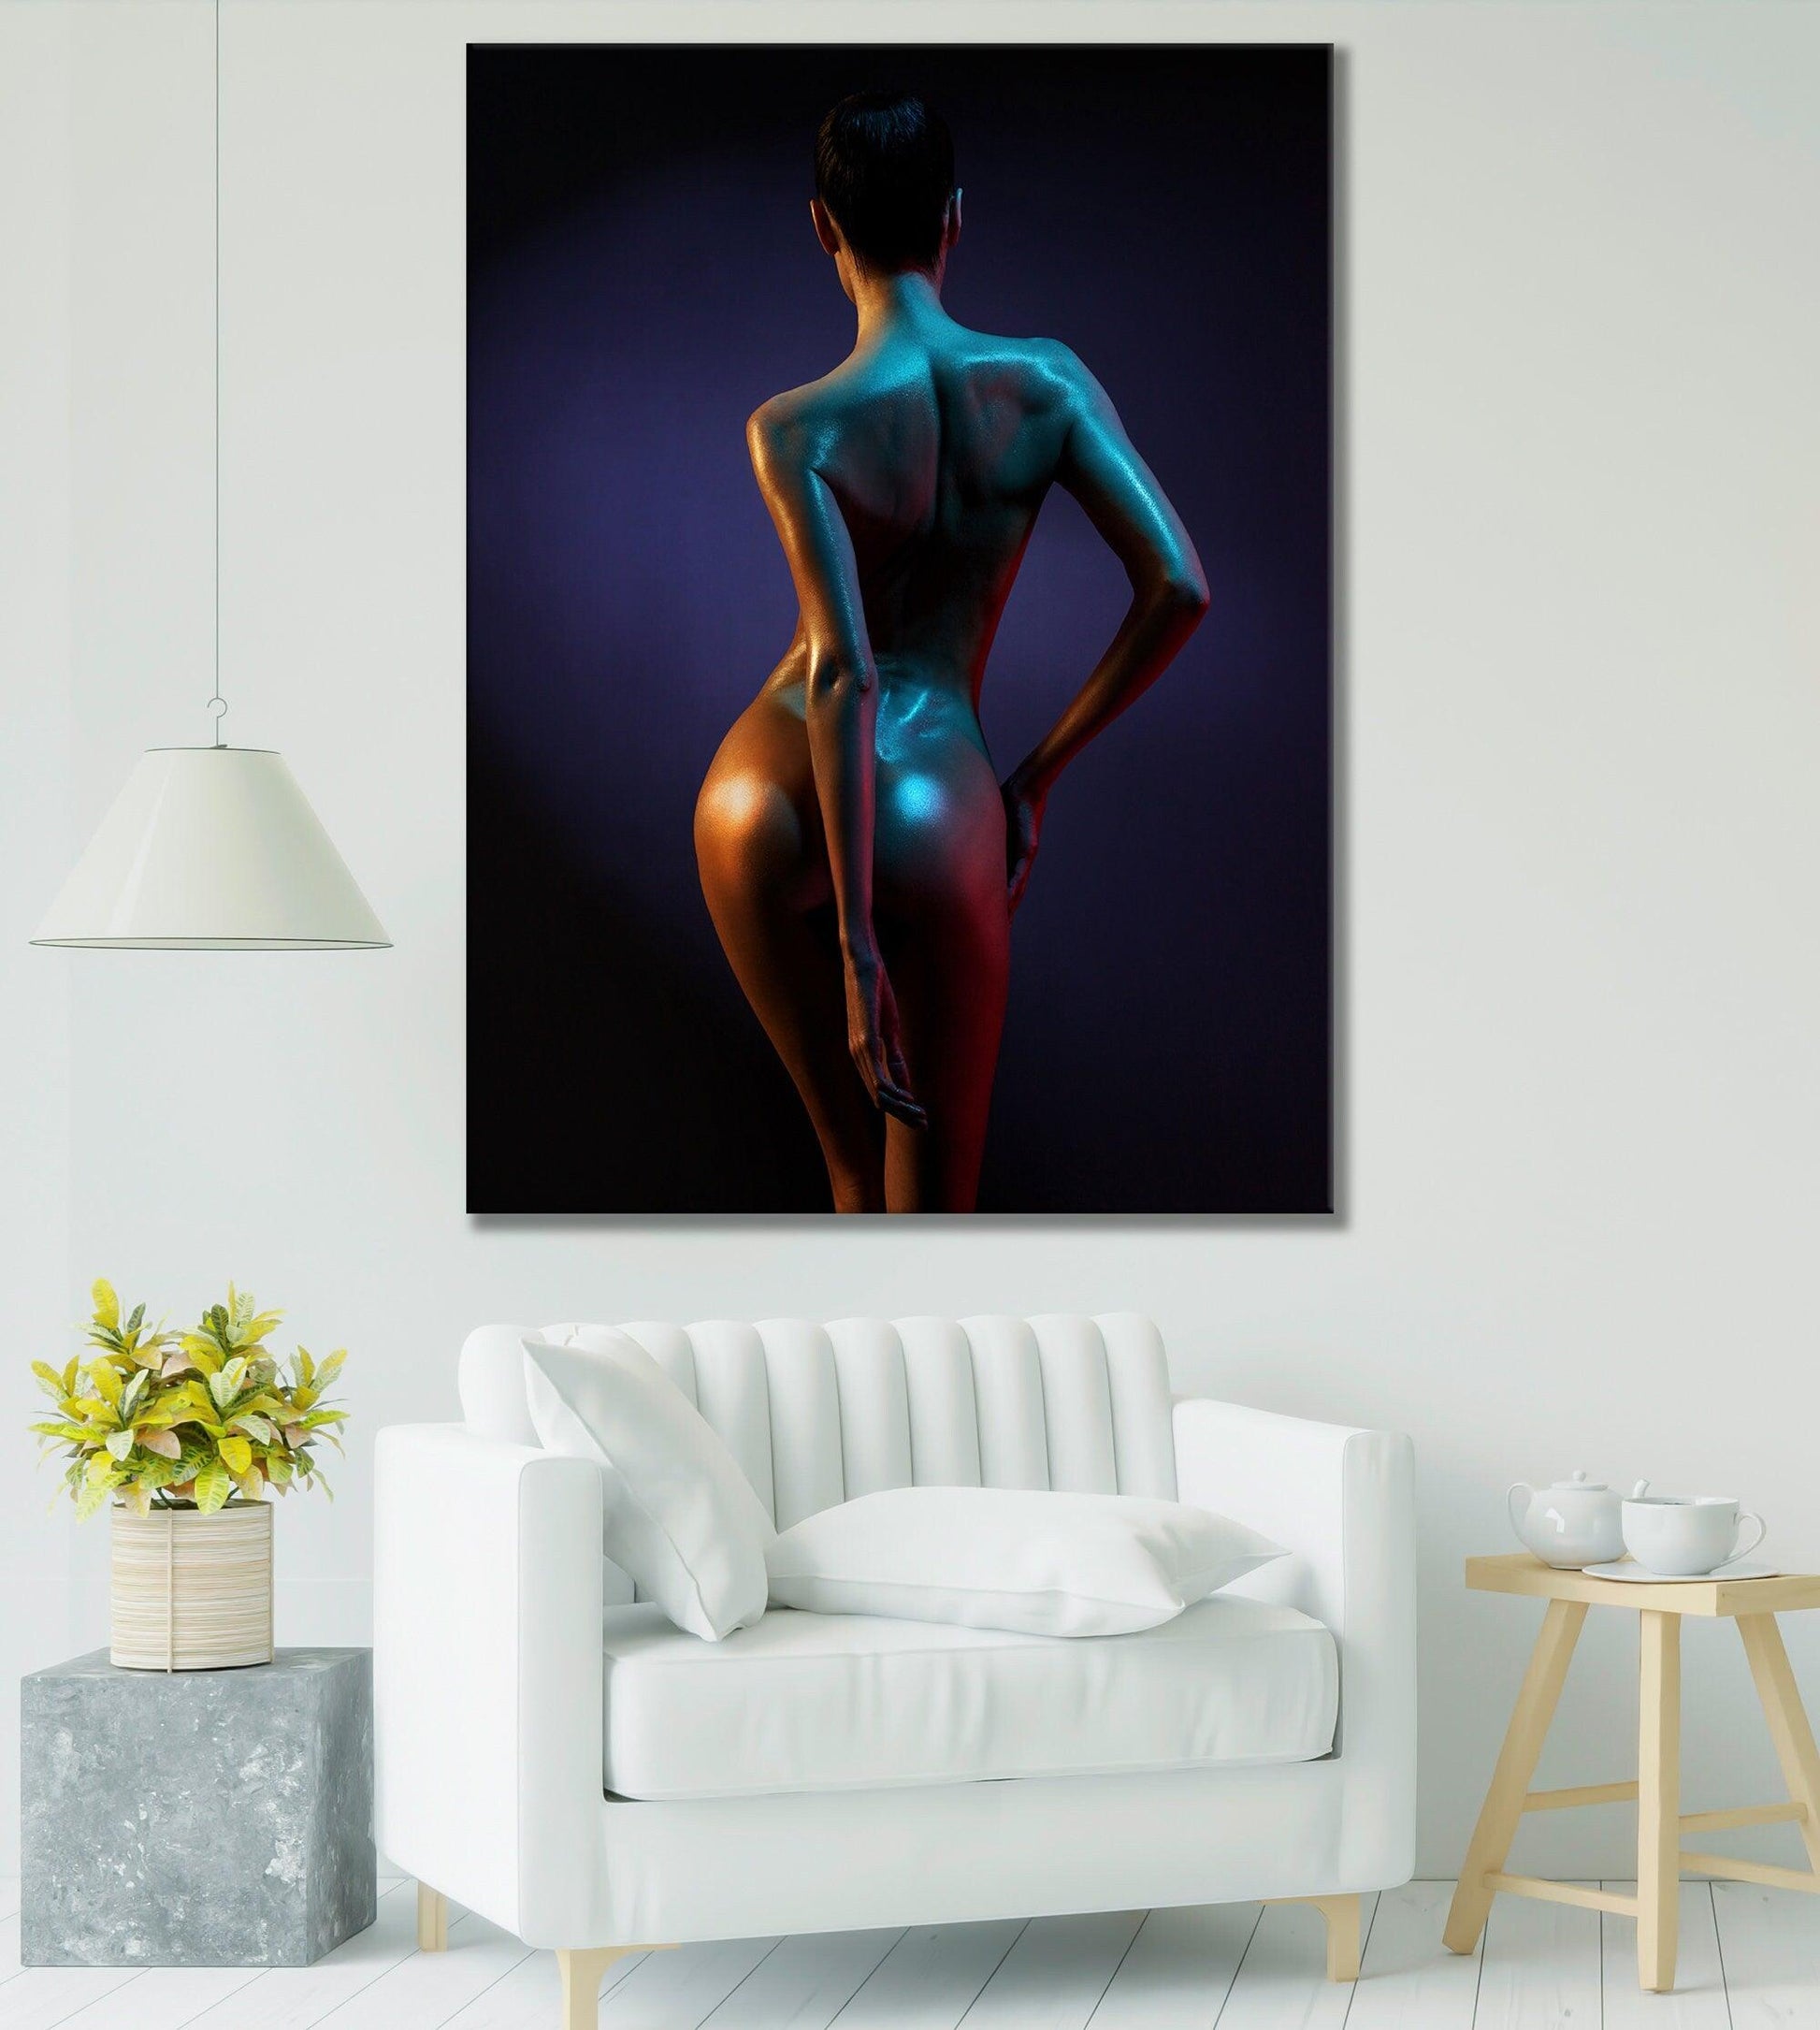 Sensual Body Art | CANVAS print, Sensual Bedroom canvas Wall art, Bedroom Abstract Art, Sexy Bedroom canvas decor, woman Canvas printing